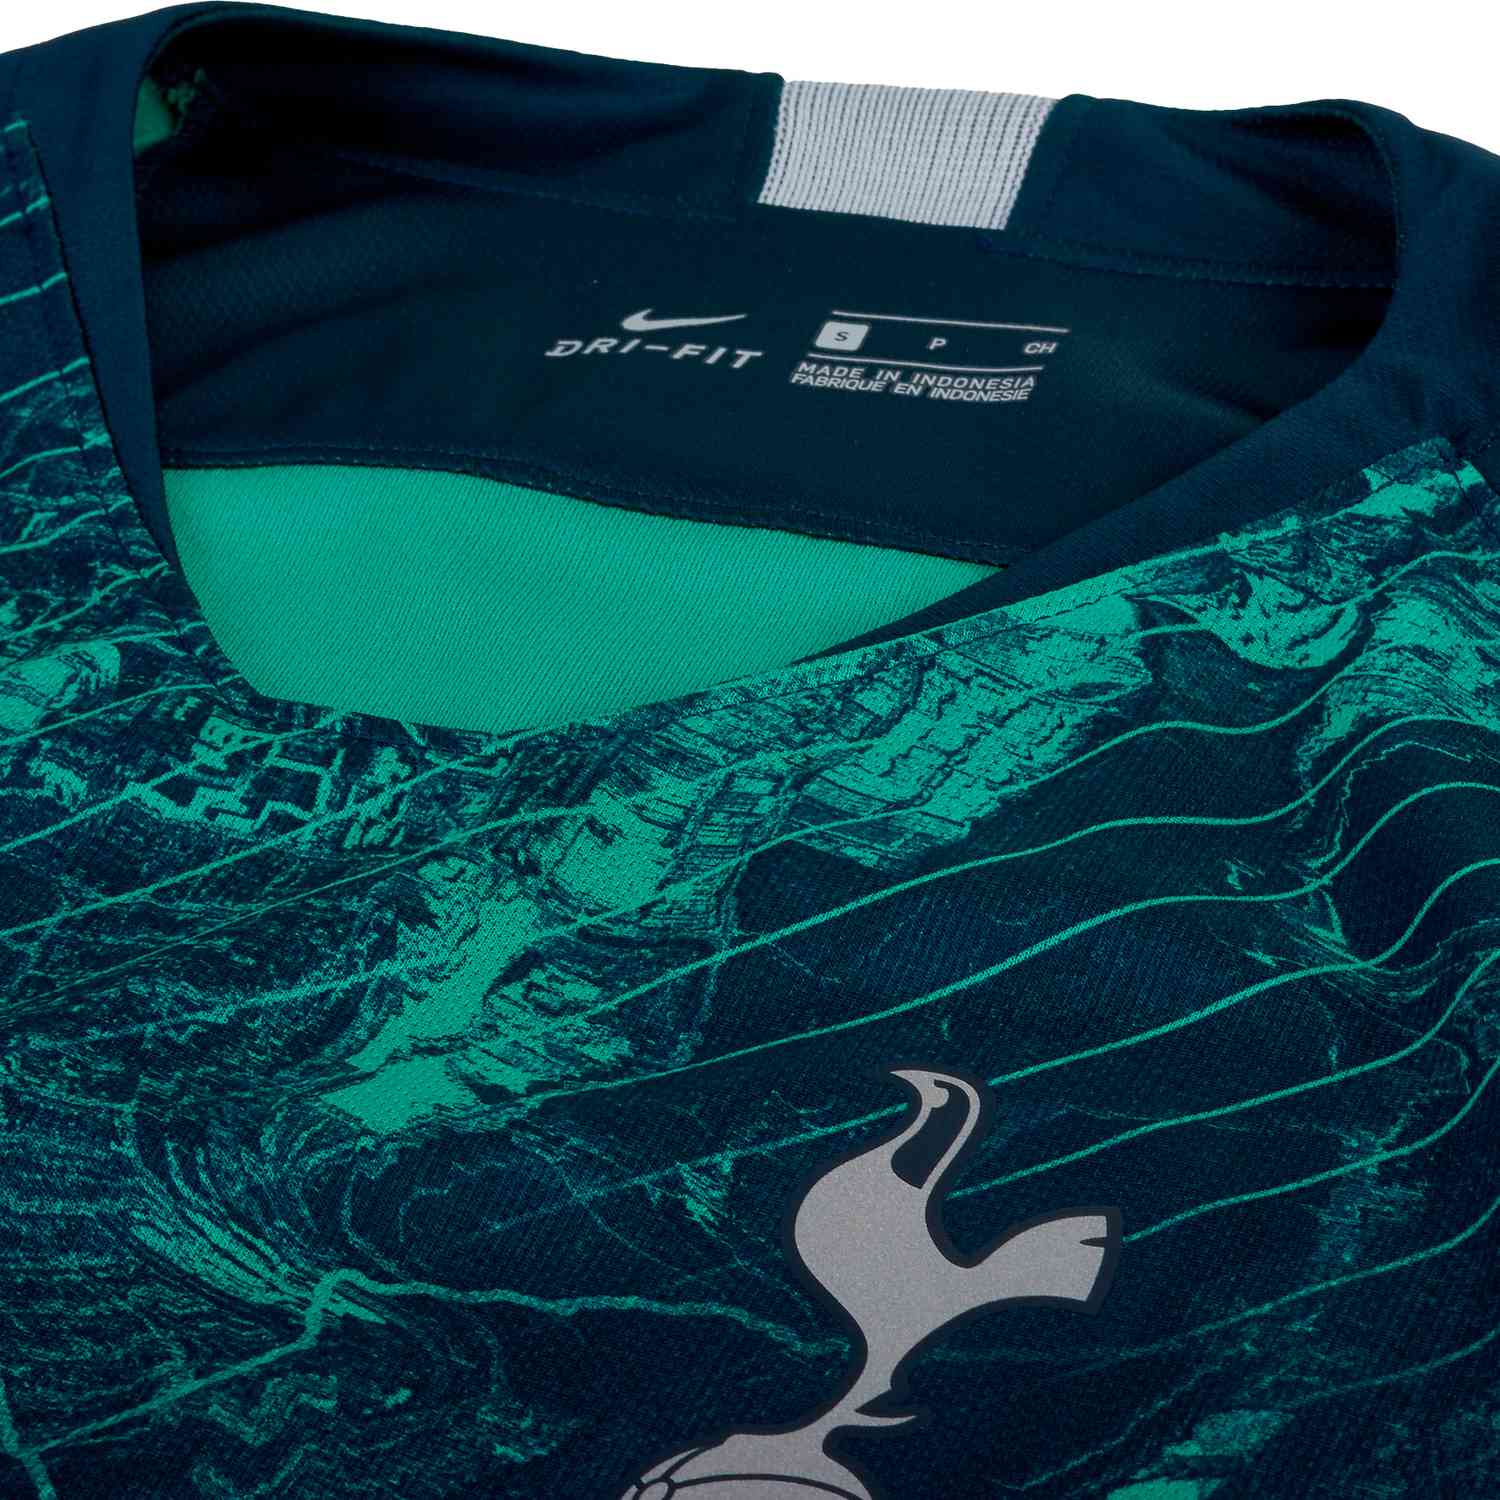 PHOTOS: Tottenham Unveil Brilliant 'Neptune Green' Third Kit With